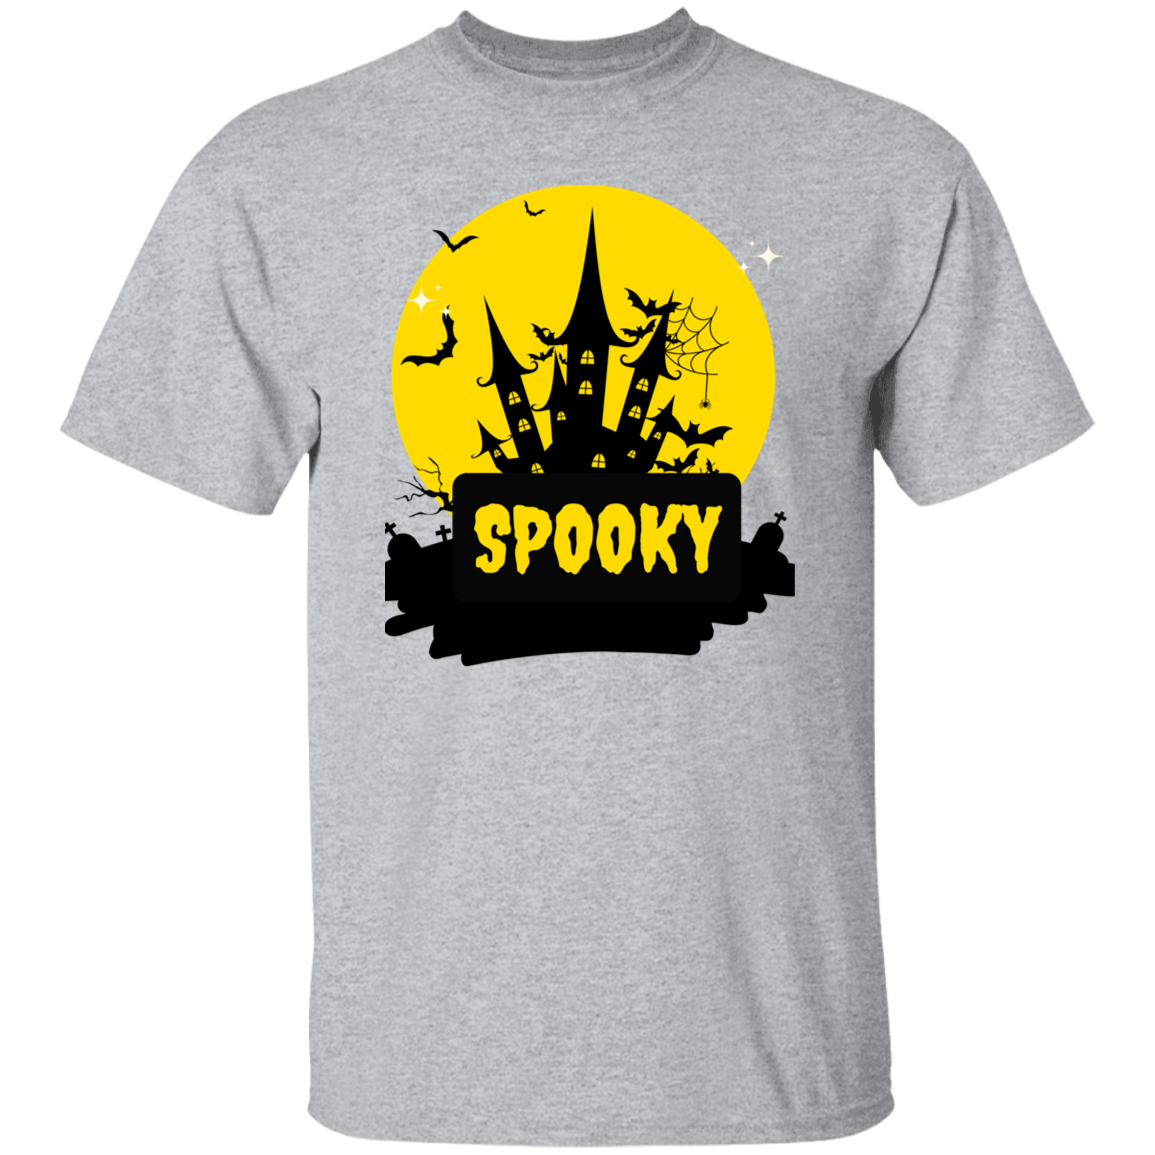 Spooky - Halloween - G500 5.3 oz. Unisex T-Shirt